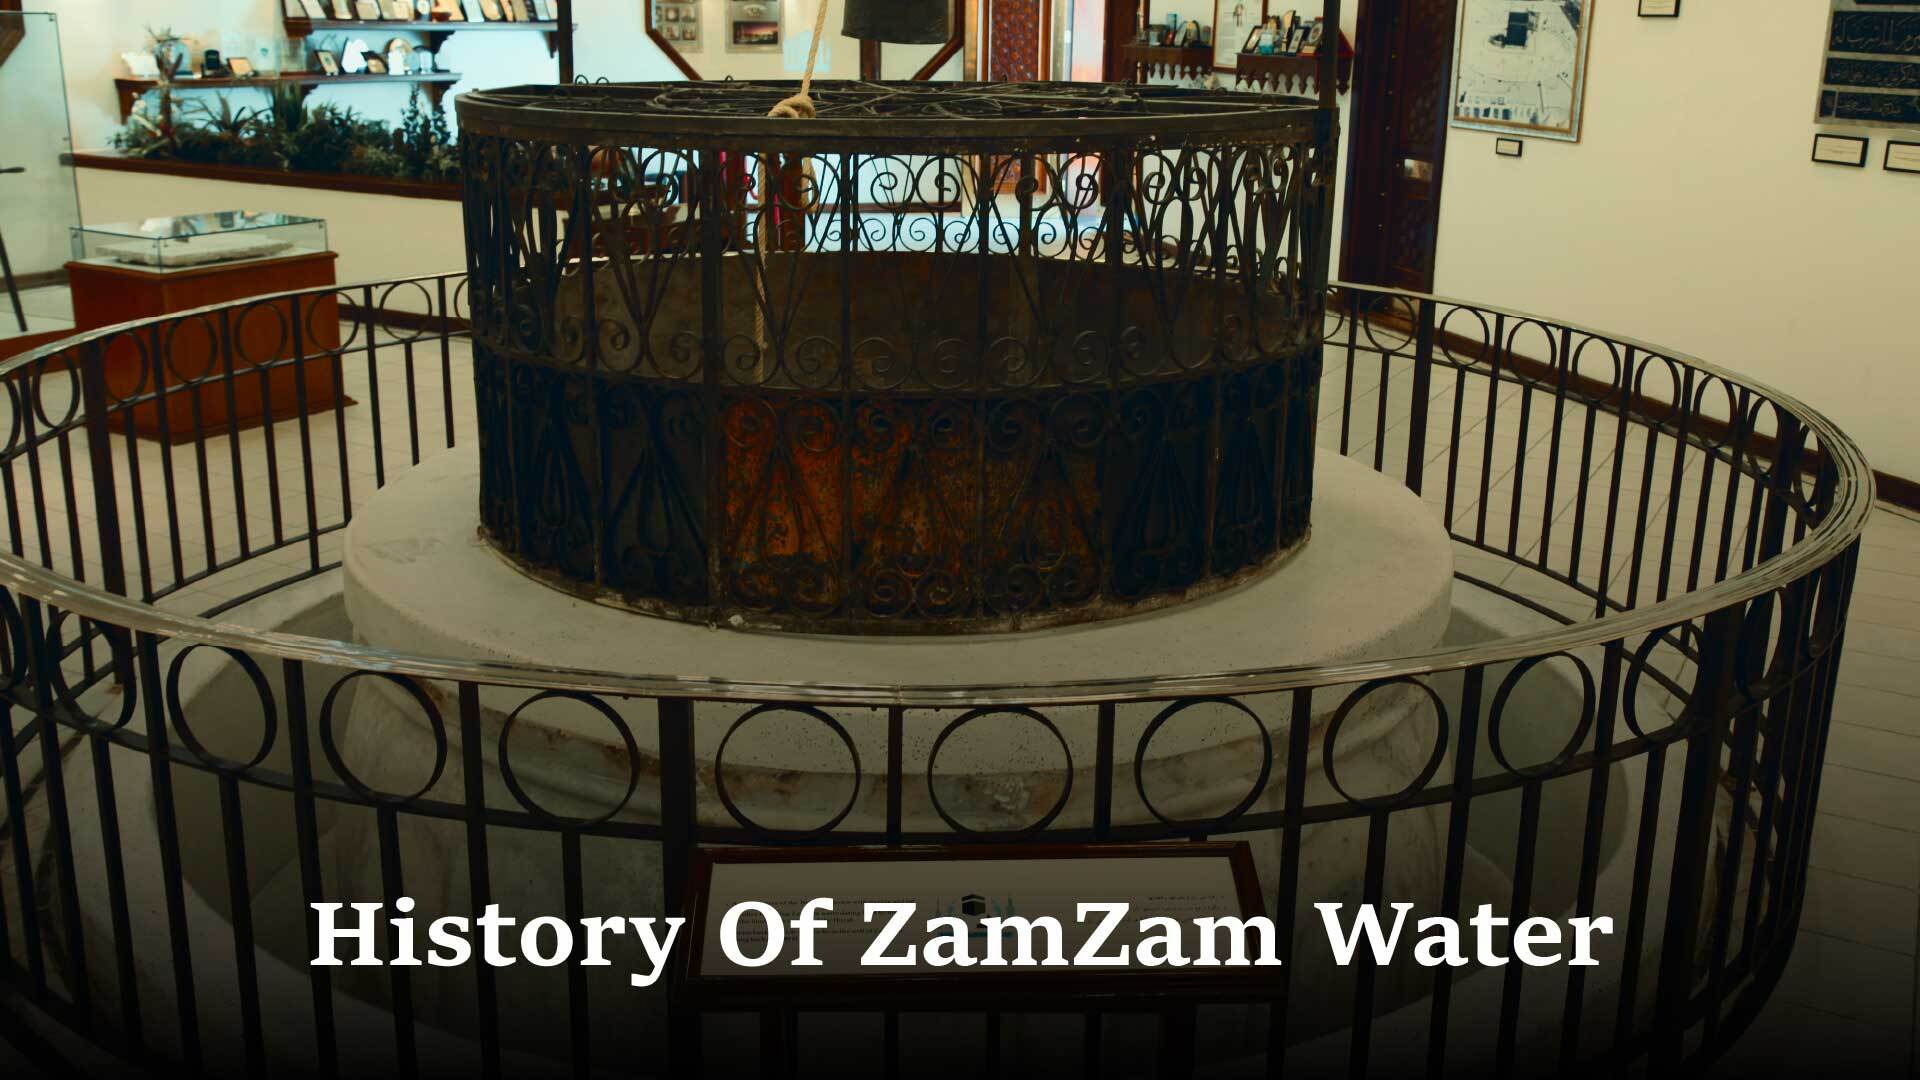 Full History of Zam Zam Water